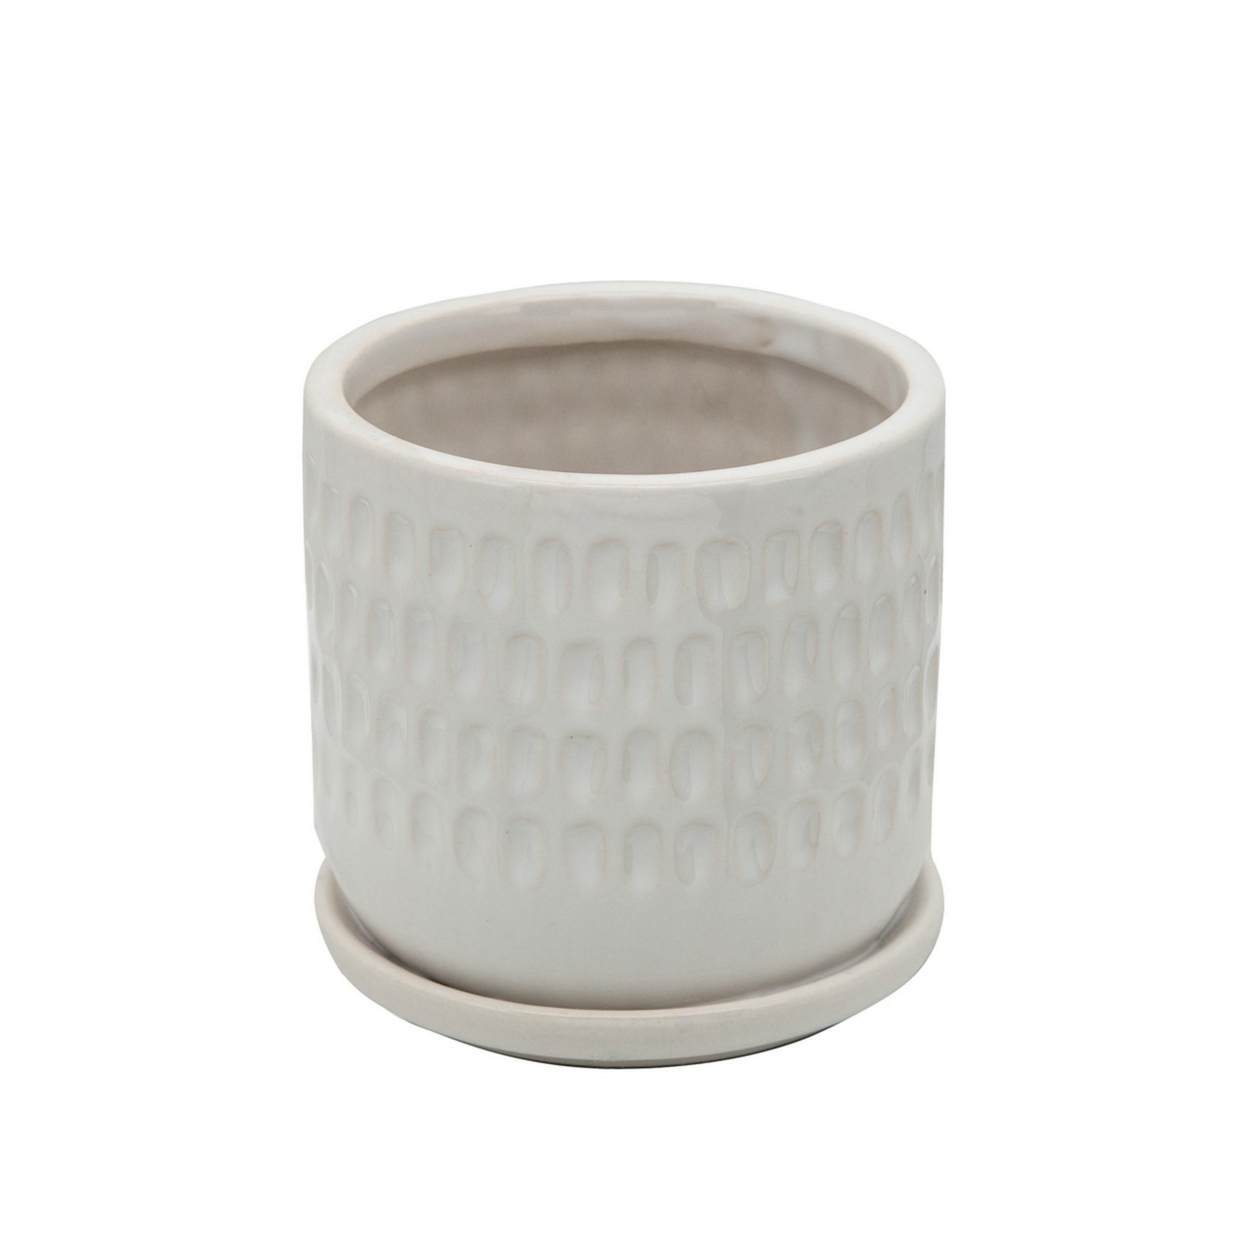 Ceramic Planter With Saucer And Hammered Design, Set Of 2, White- Saltoro Sherpi